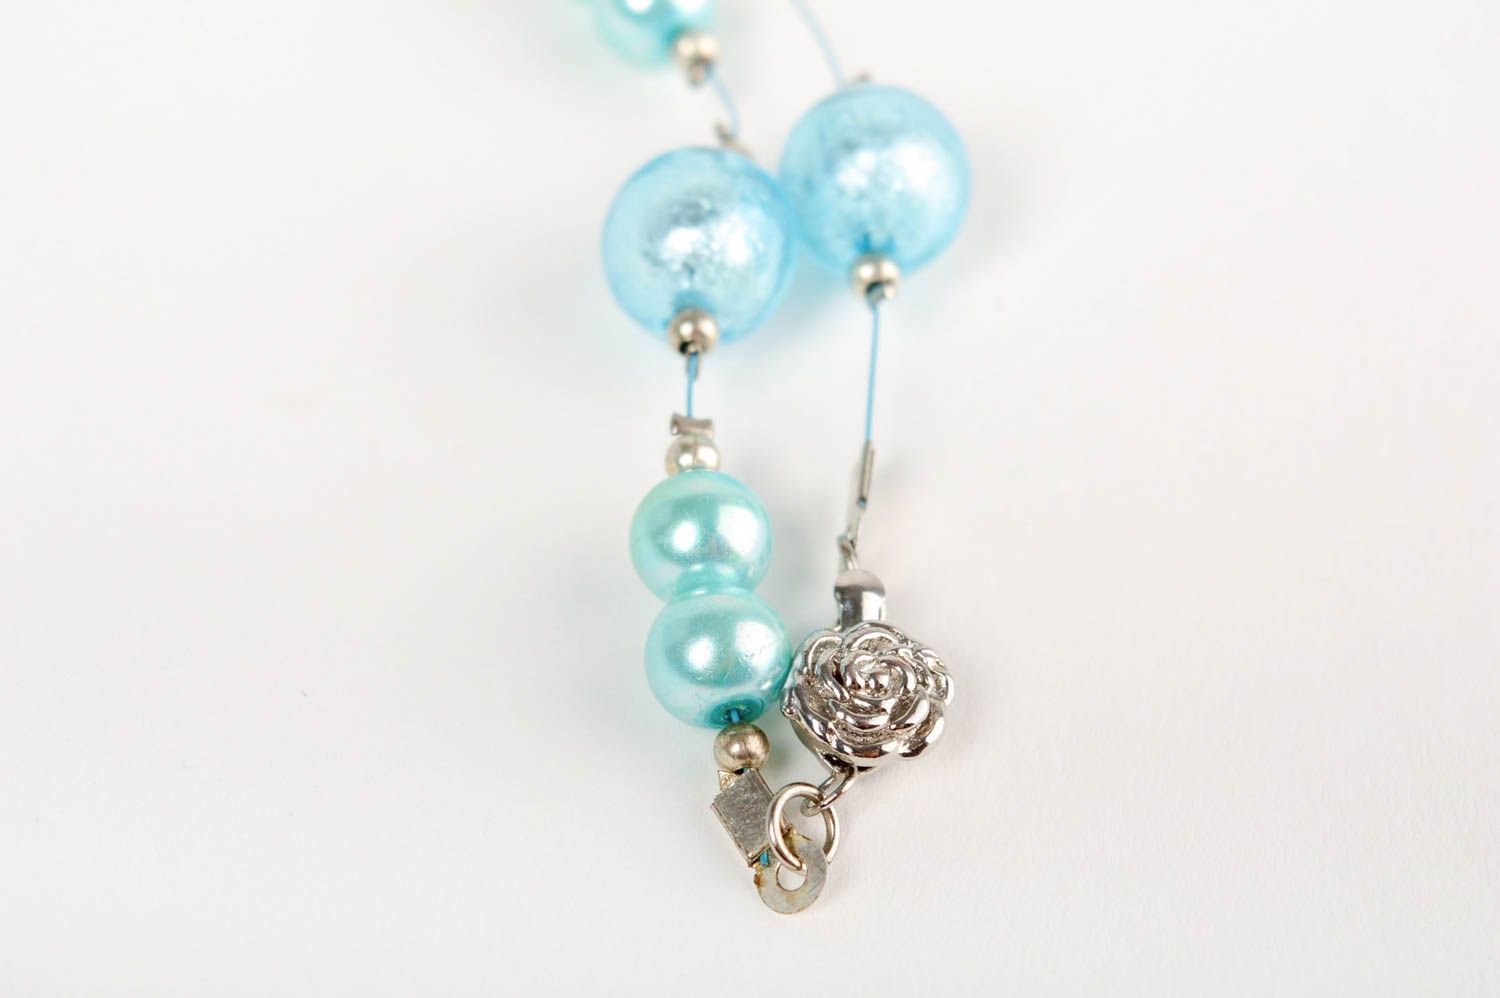 Handmade Venetian glass and ceramic pearls necklace handmade designer accessory photo 4